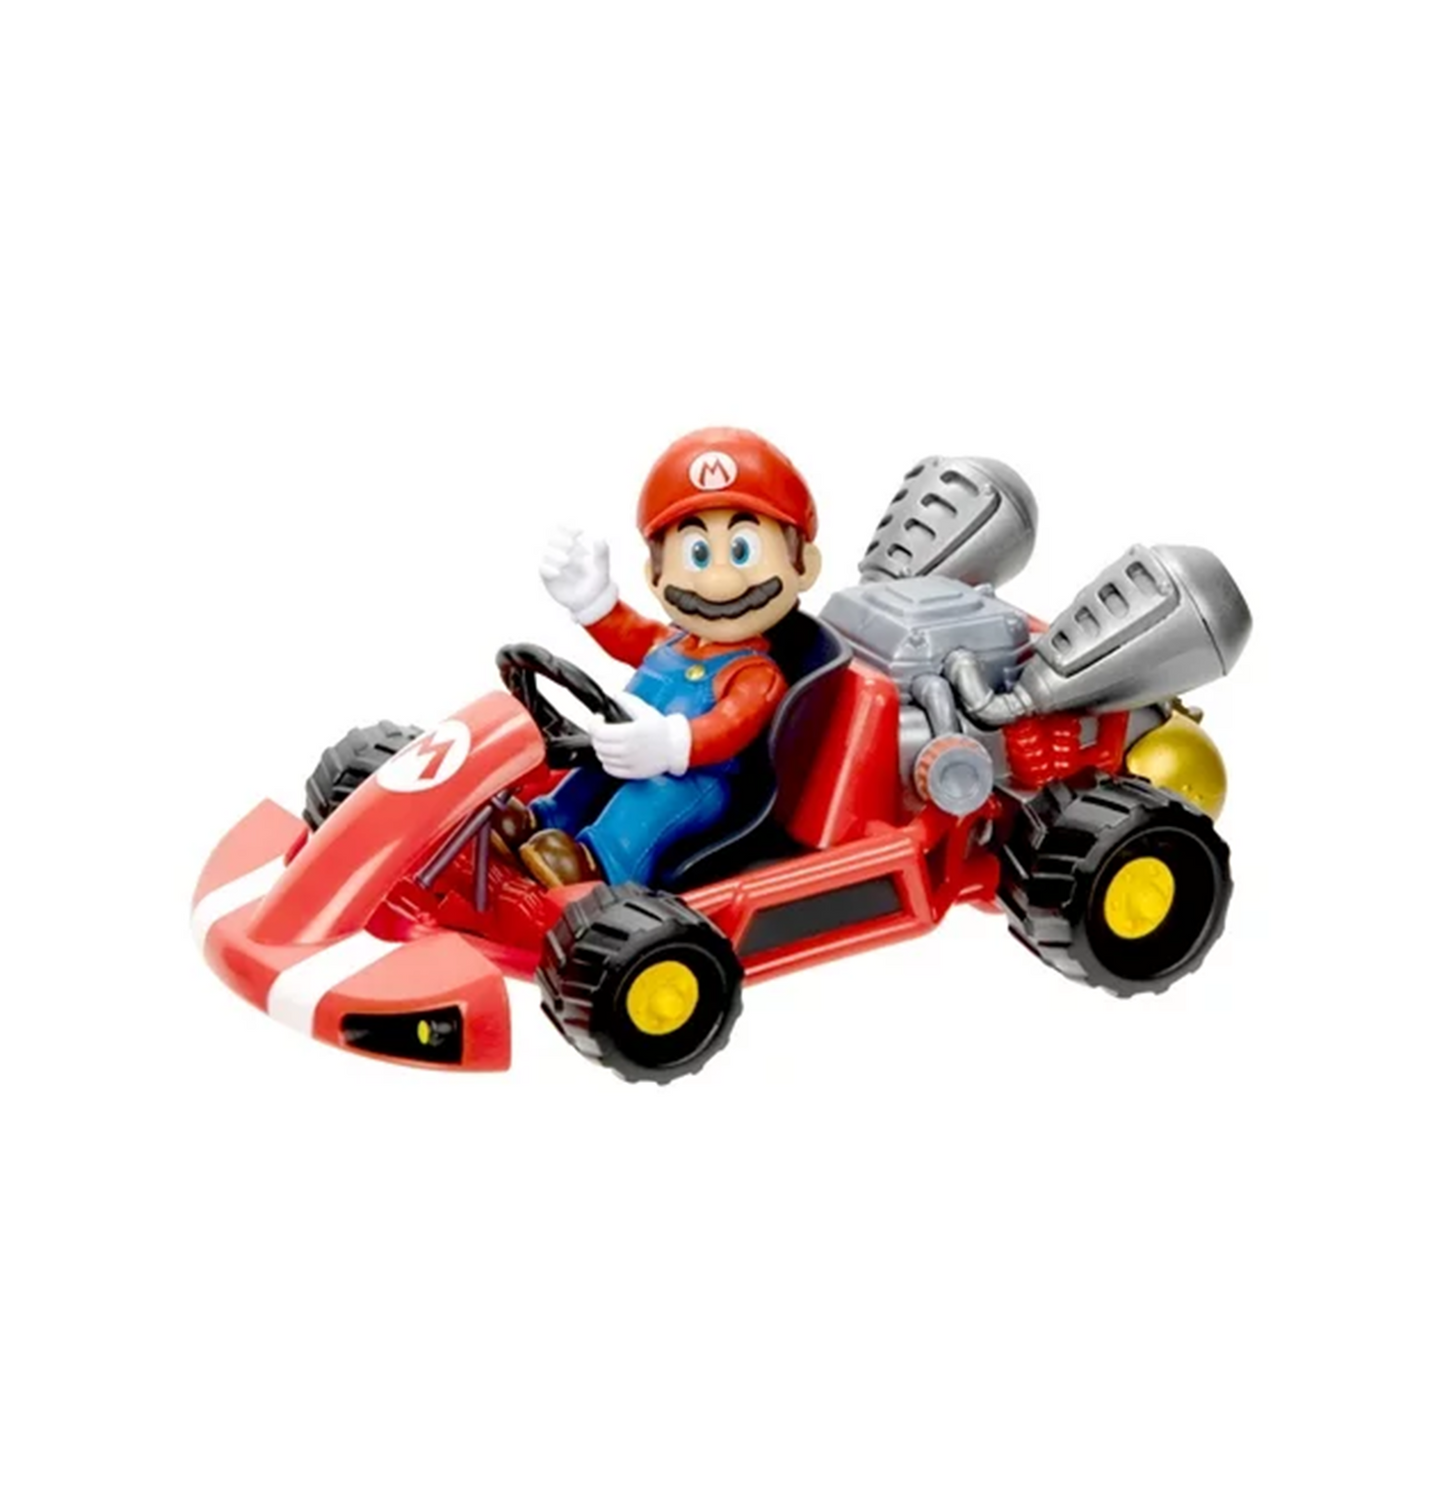 Super Mario Bros. The Movie Pull Back Racers Mario Figure & Vehicle